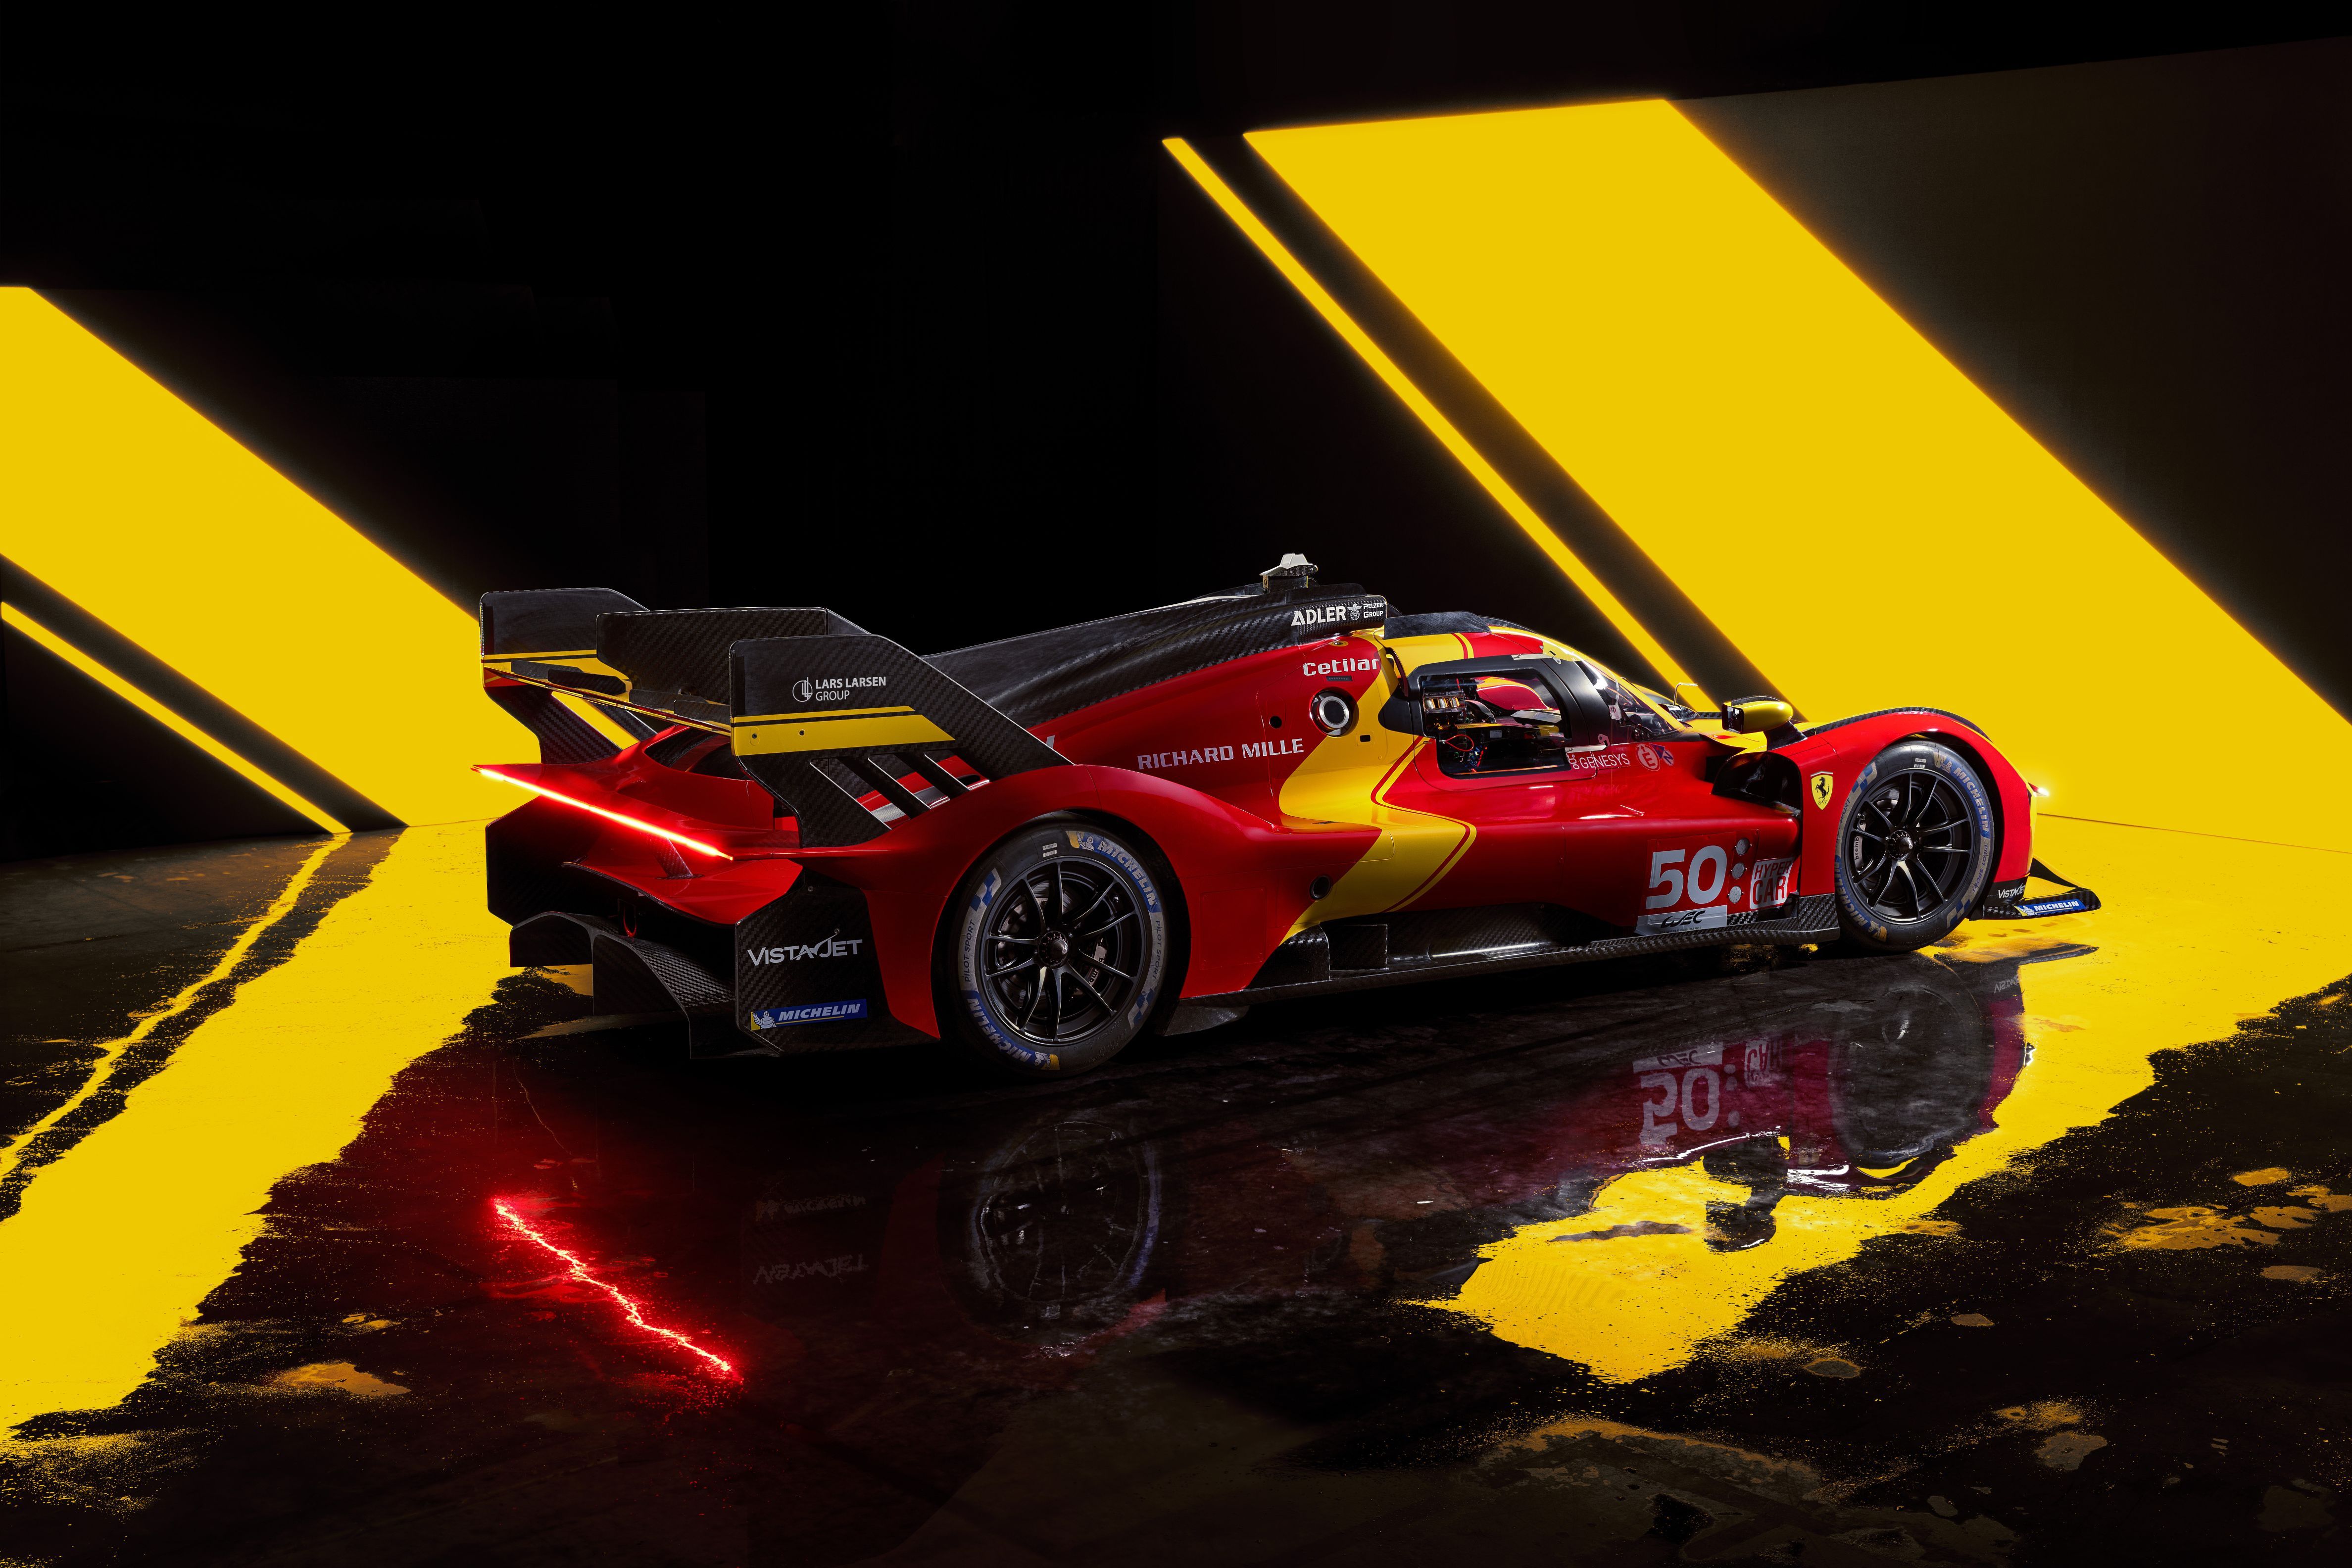 WEC: #51 Ferrari wins Le Mans 24 Hours to end Toyota's reign